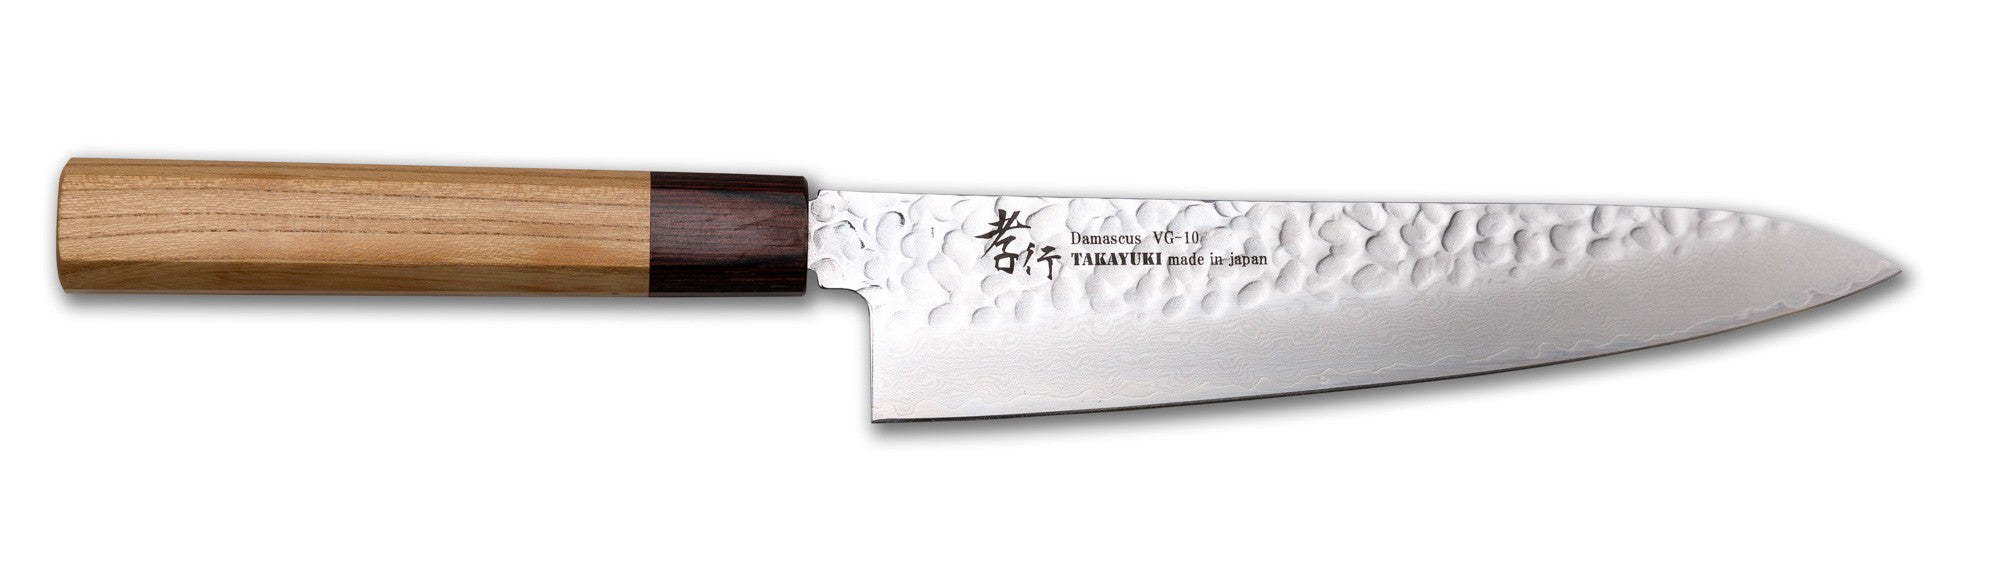 Couteau de chef Damas 33 couches Sakai Takayuki, manche Zelkova, 210 mm / 8,3"